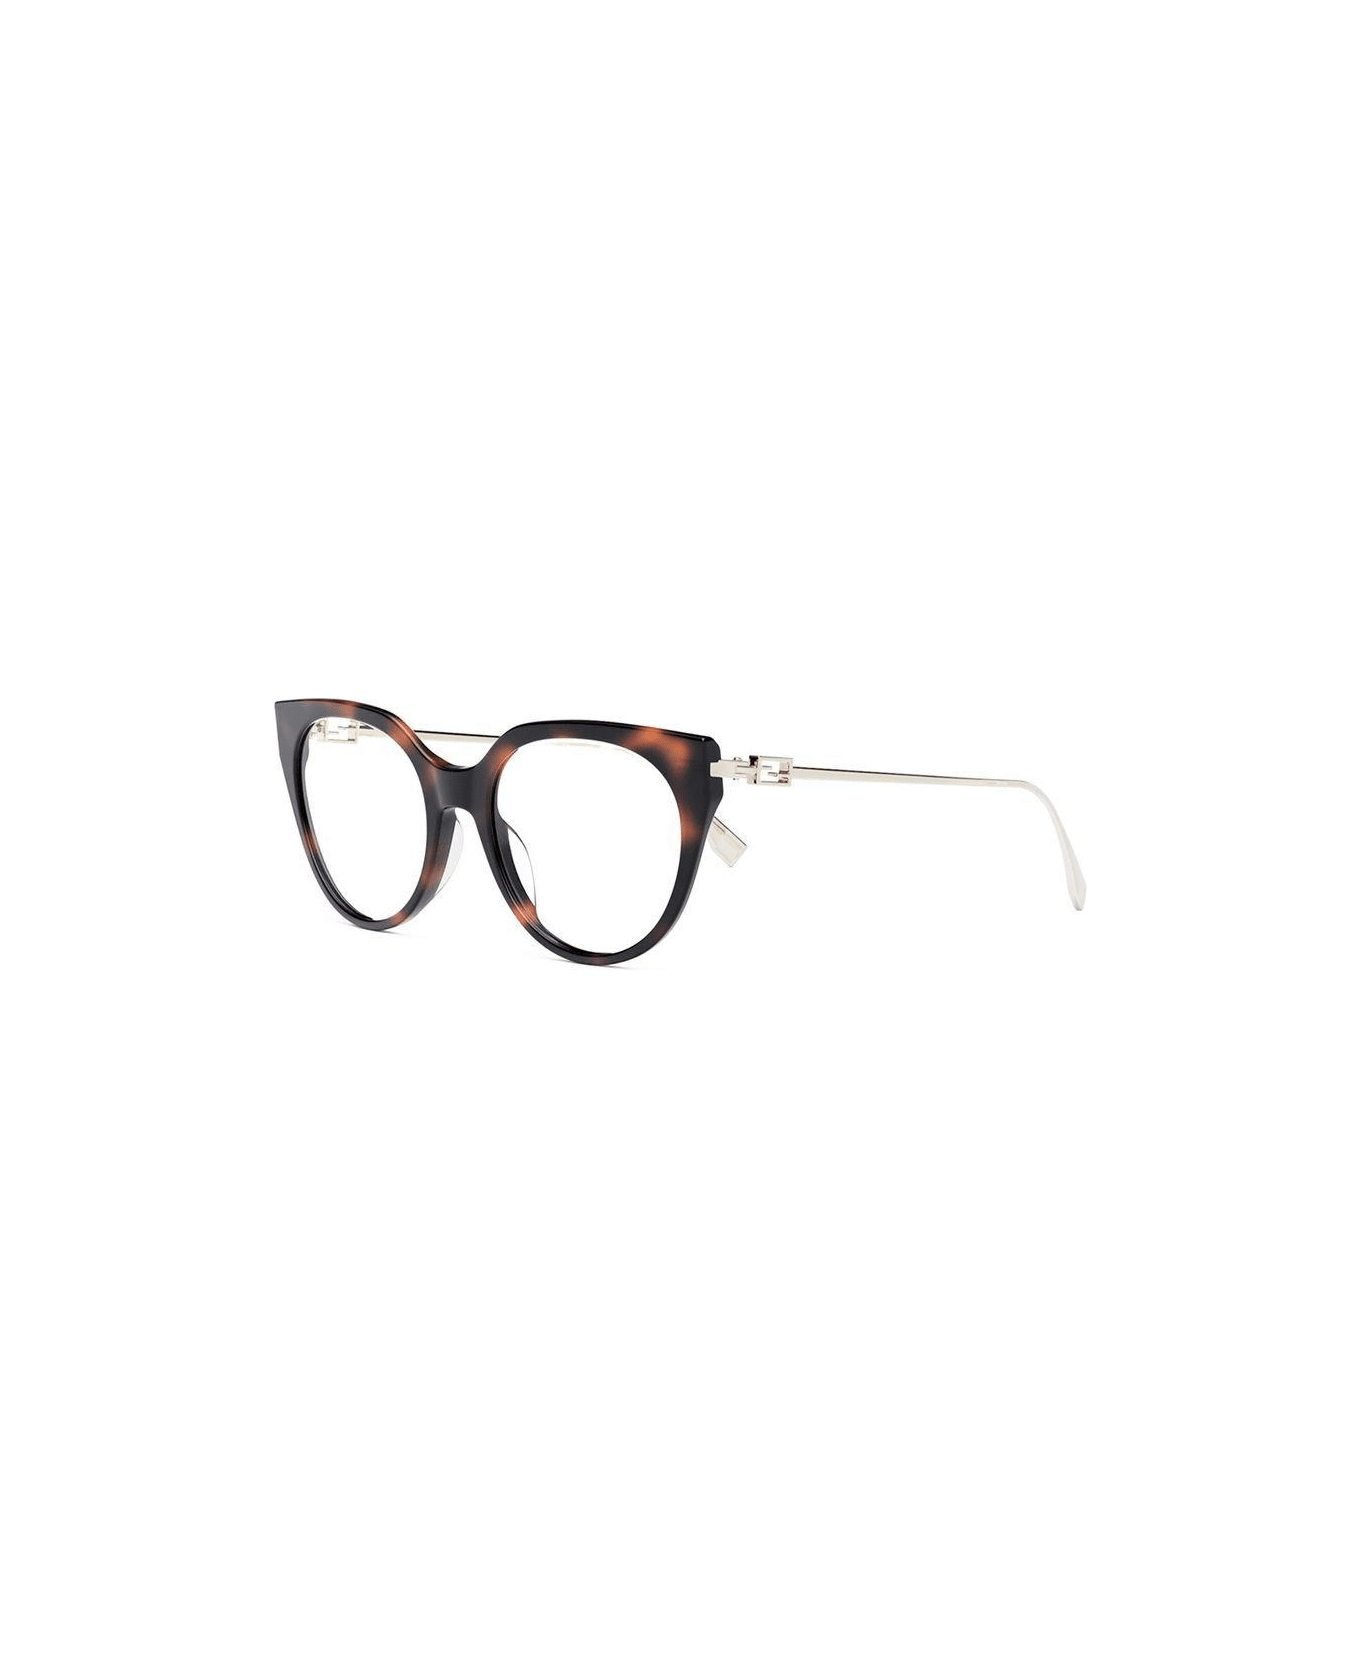 Fendi Eyewear Brille Cat-eye Glasses - 054